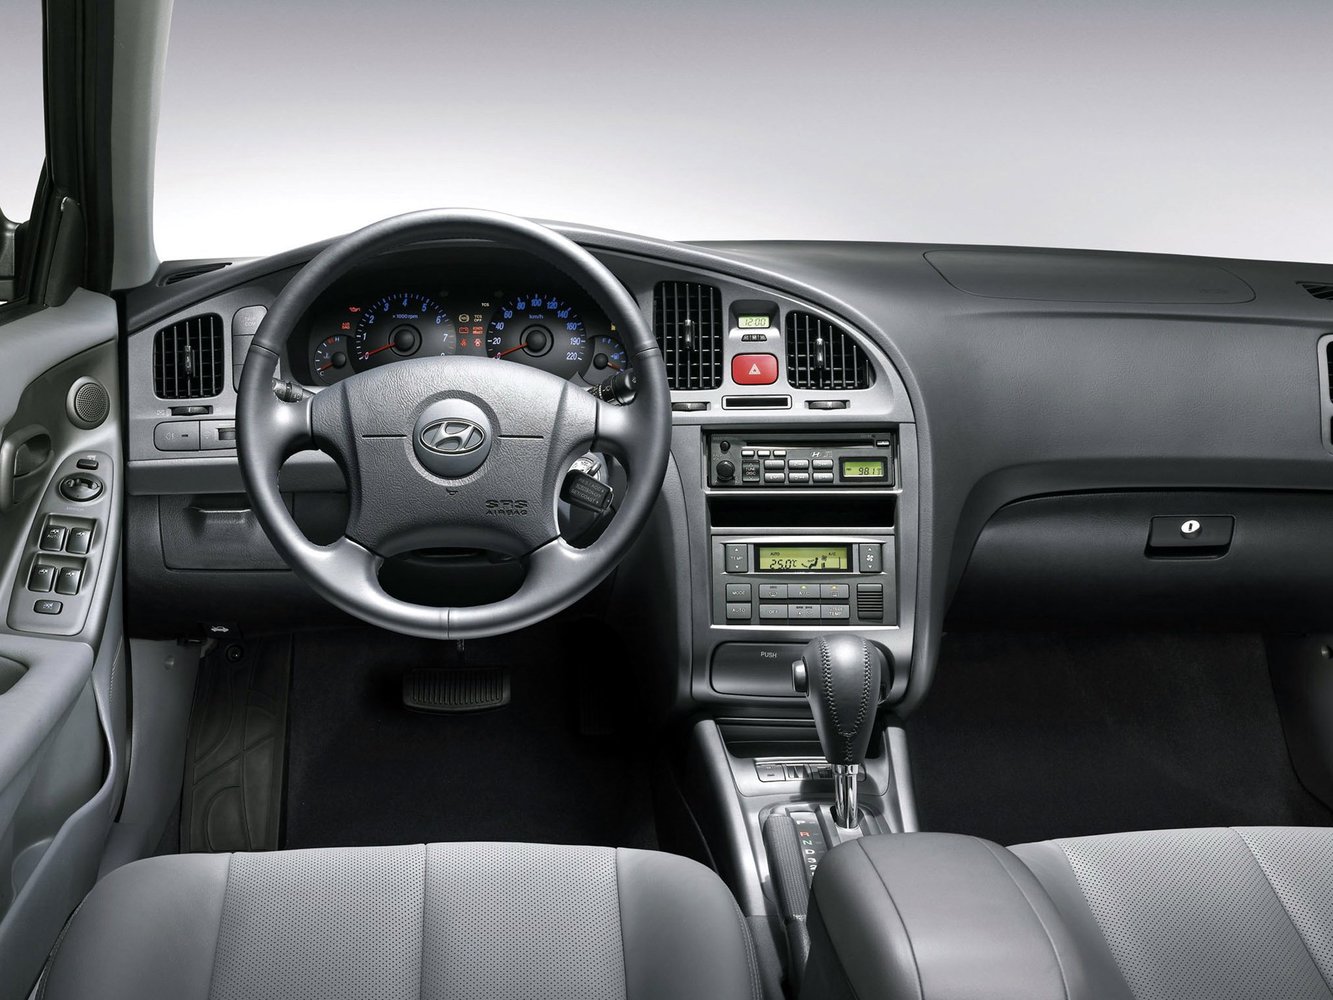 седан EURO Hyundai Elantra 2000 - 2003г выпуска модификация 1.6 AT (107 л.с.)